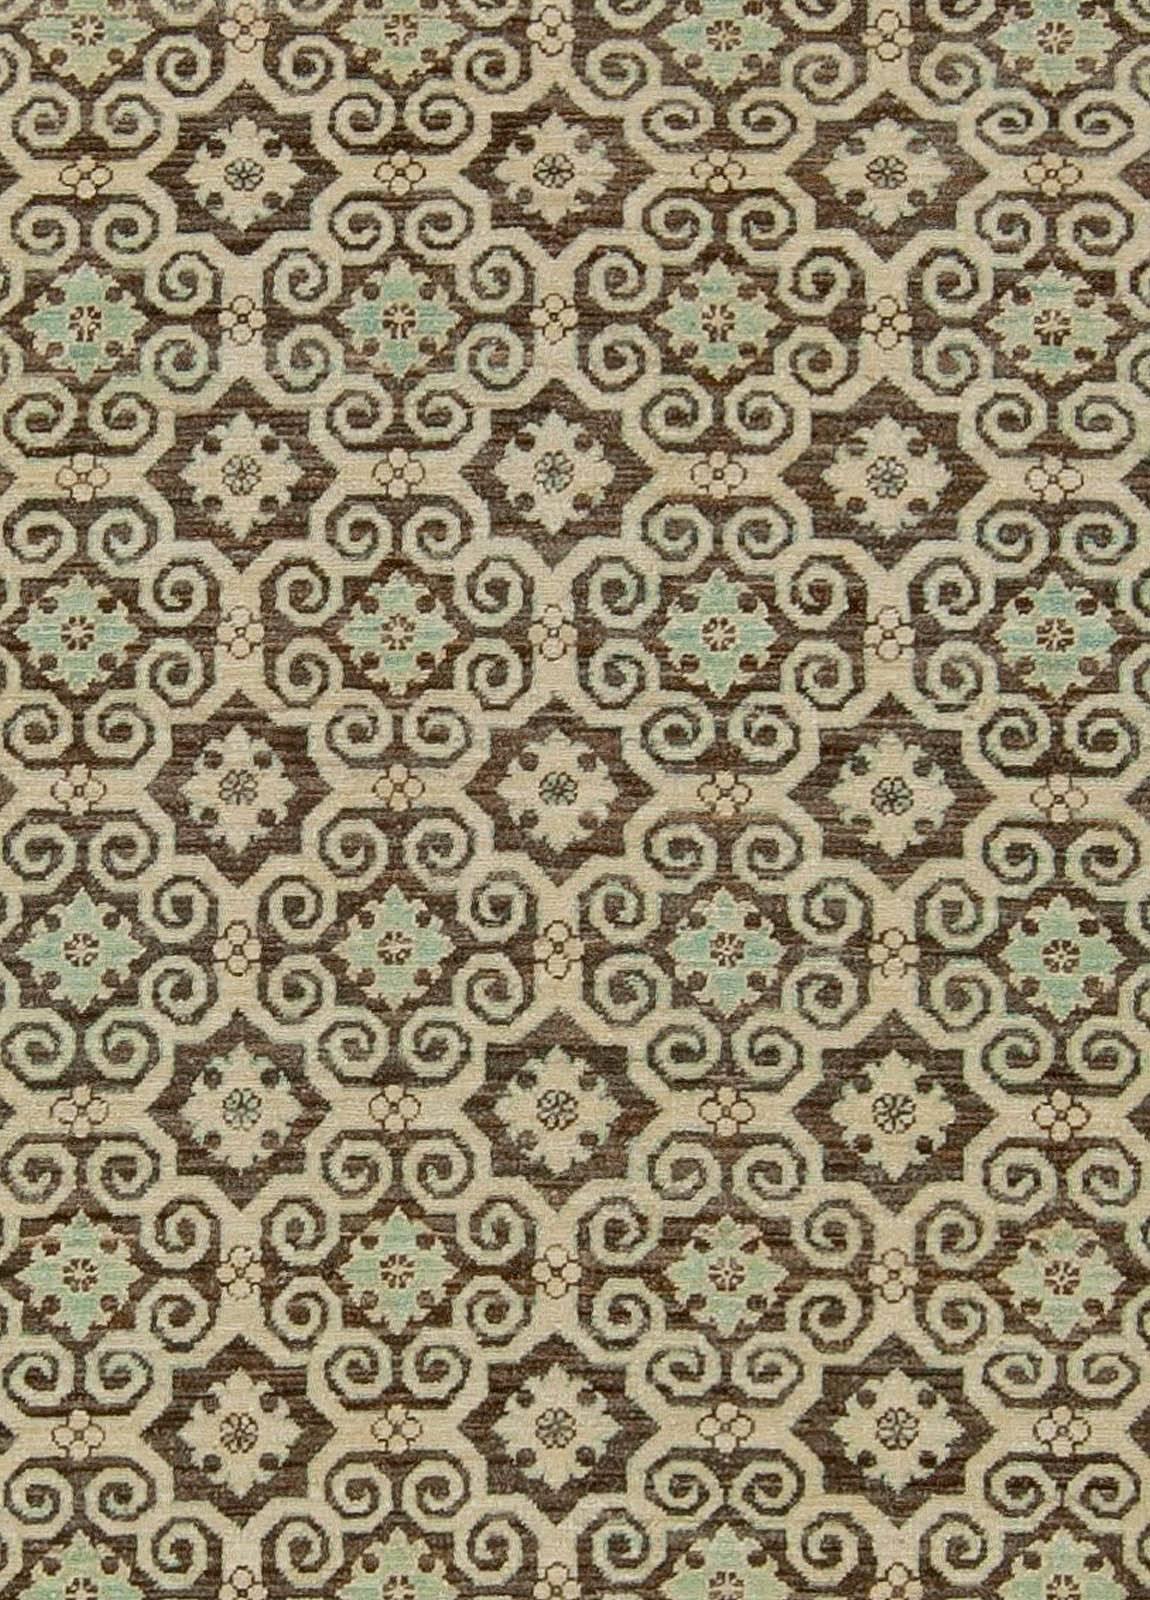 Modern high-quality Tabriz style handmade wool rug by Doris Leslie Blau.
Size: 8'5